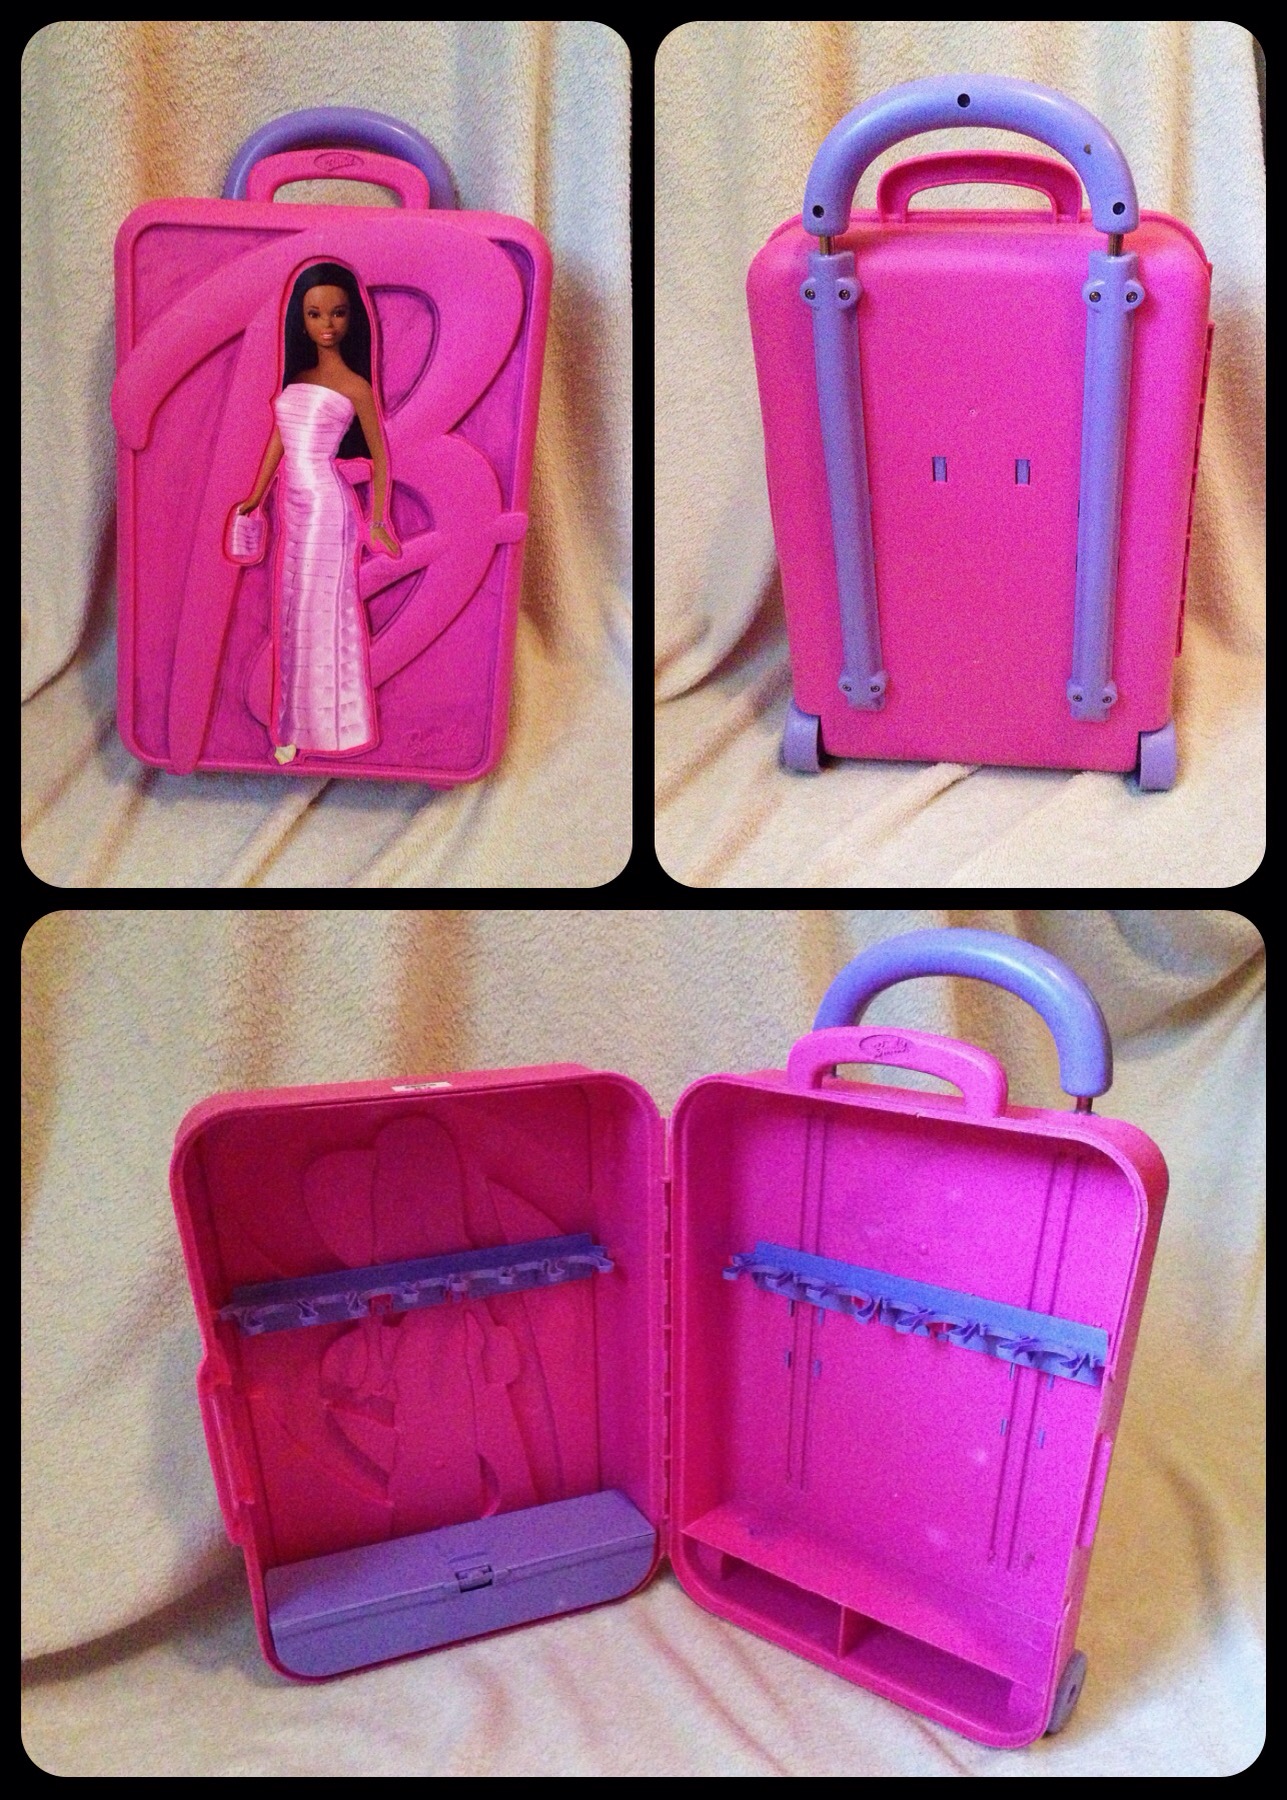 barbie suitcase on wheels